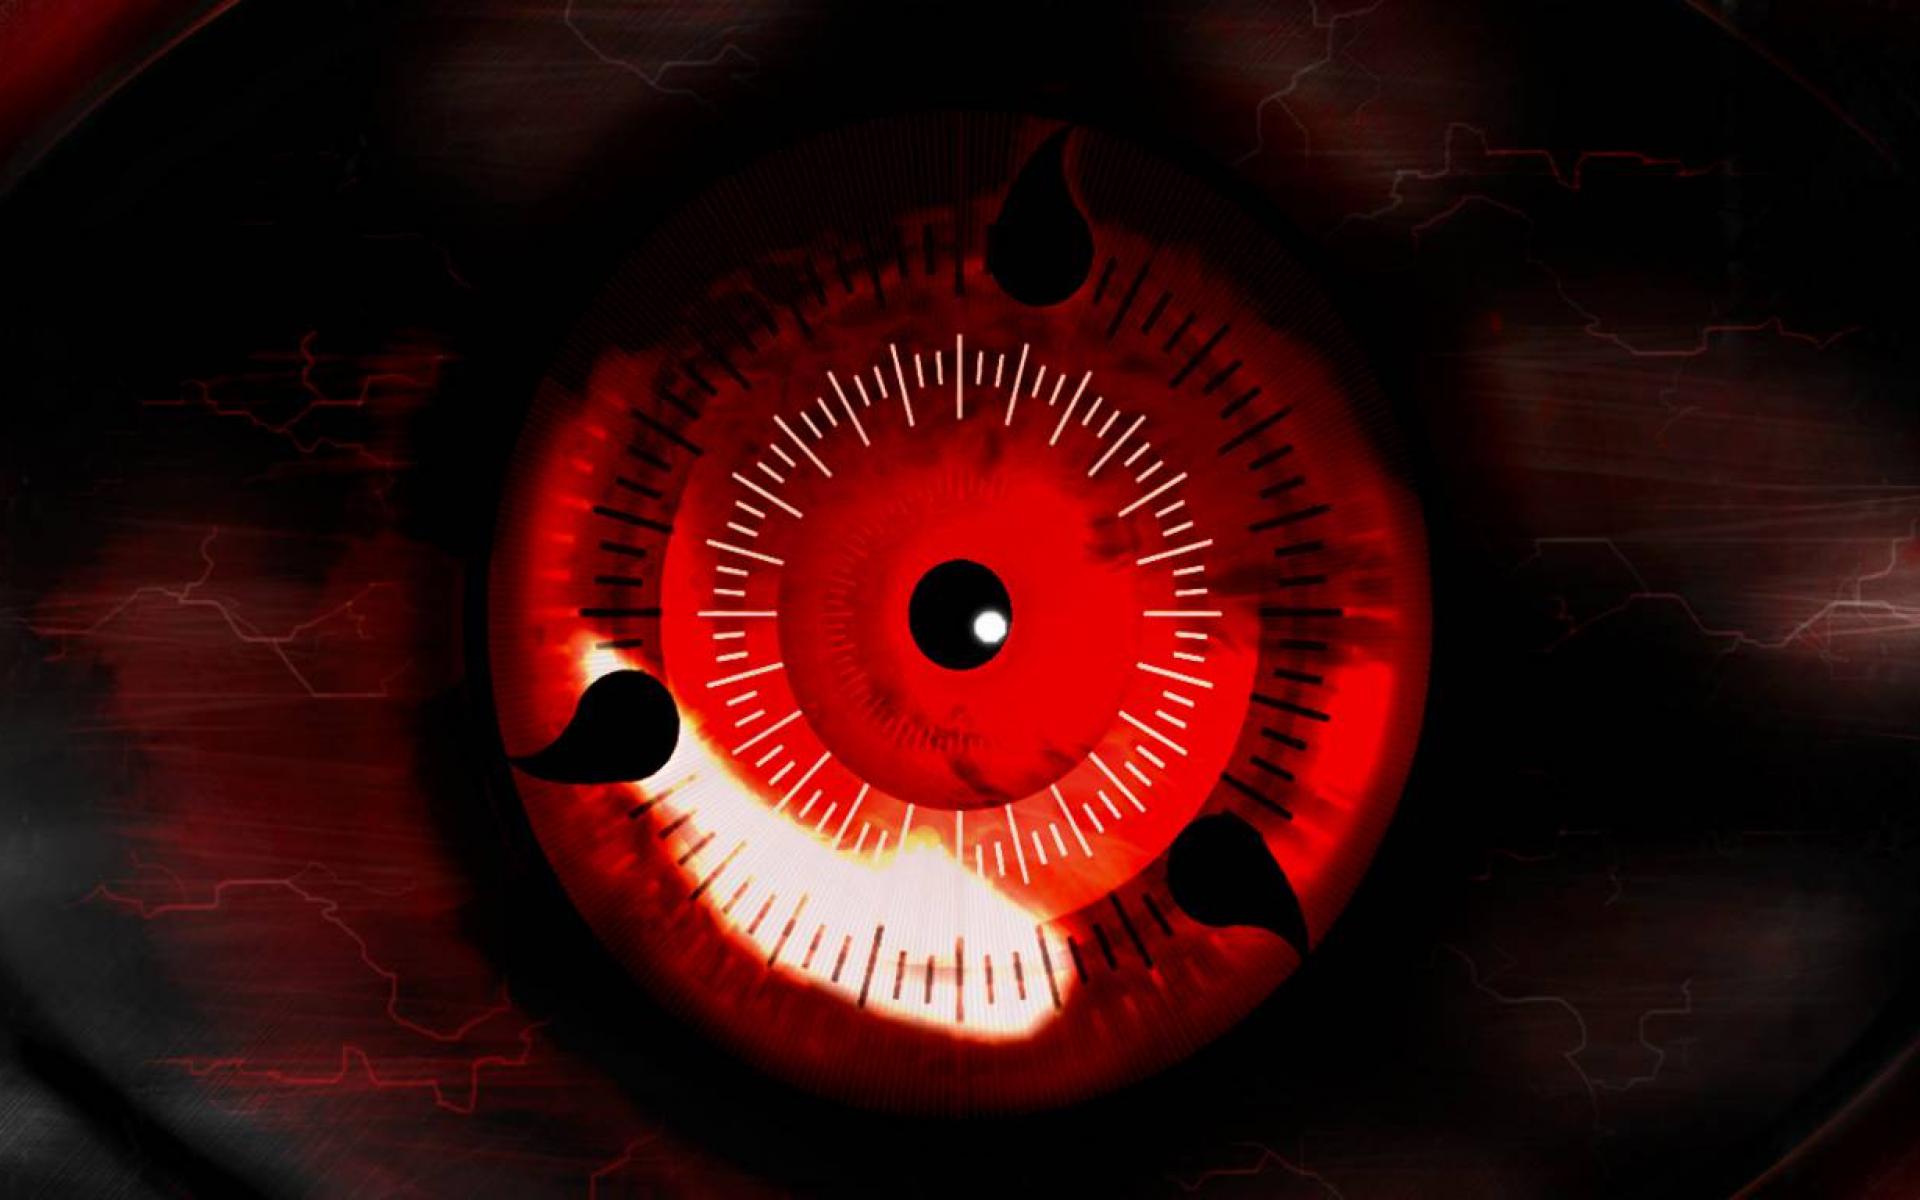 A19 Naruto sharingan eyes anime HD Desktop background wallpapers downloads